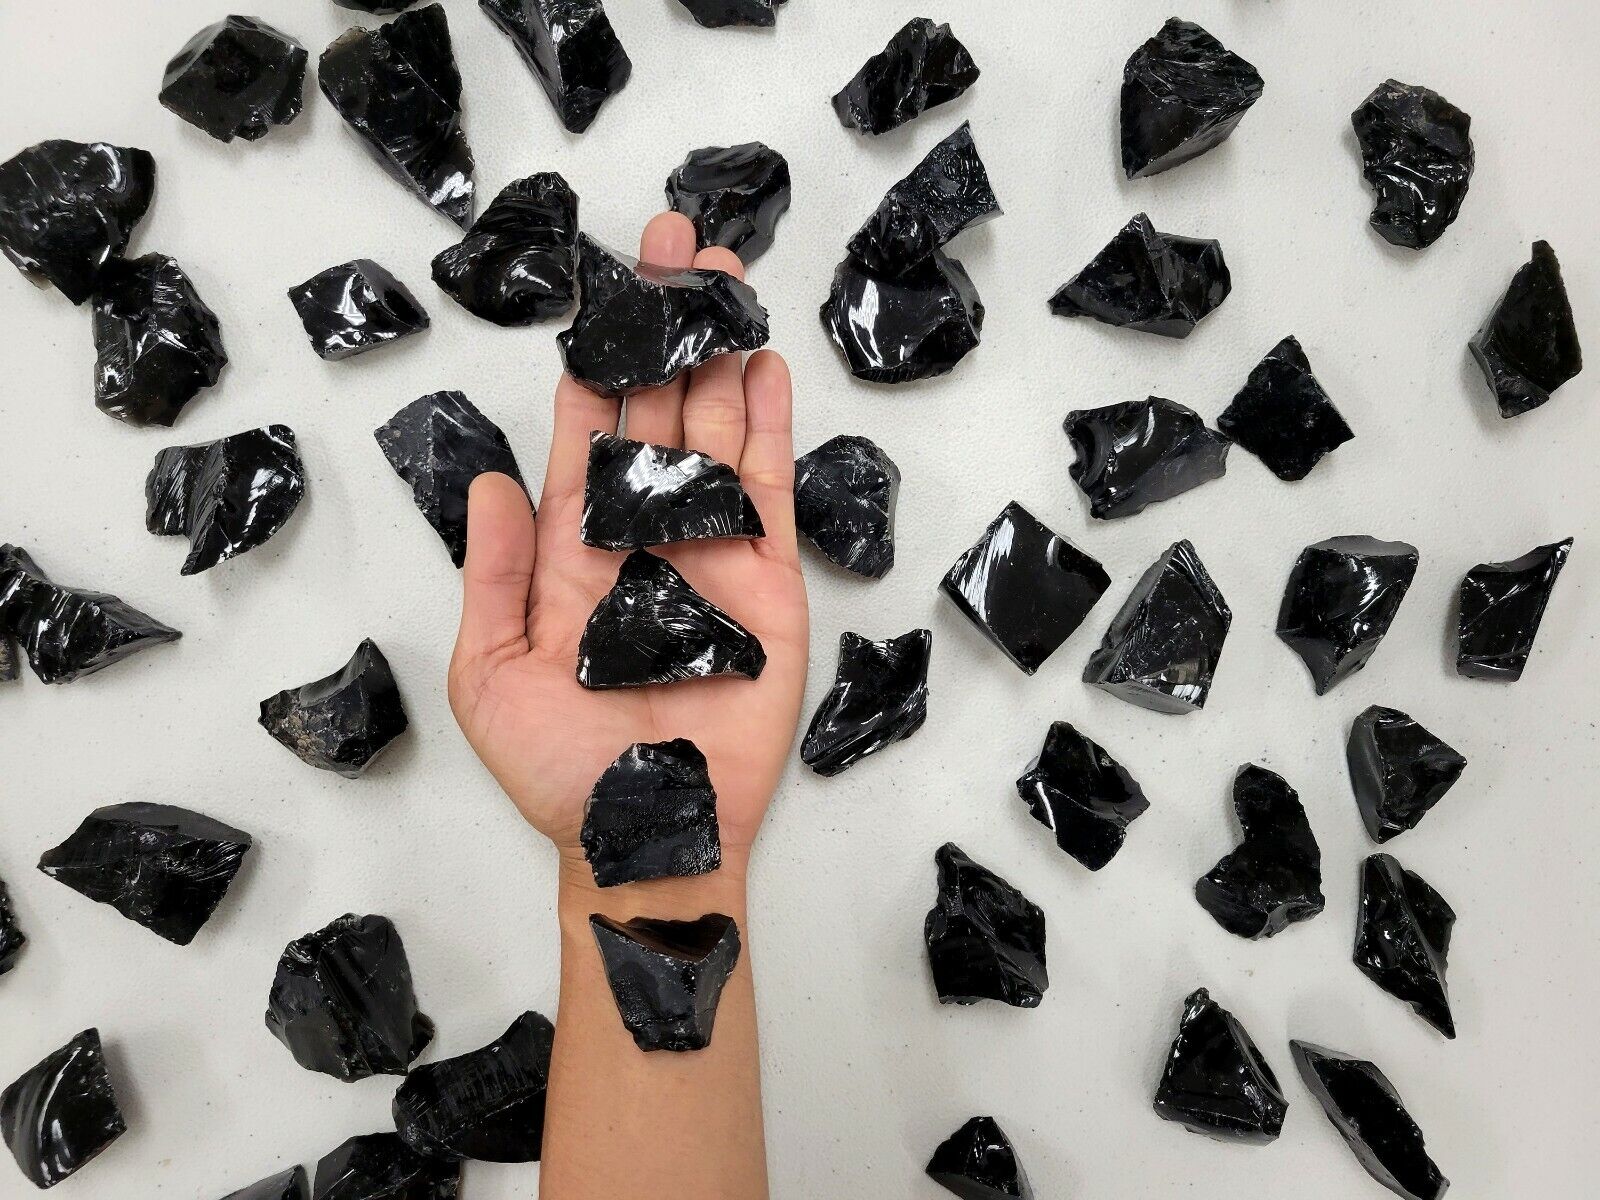 Rough Black Obsidian Crystals Stone Chunks Bulk Raw Natural Healing Gemstones